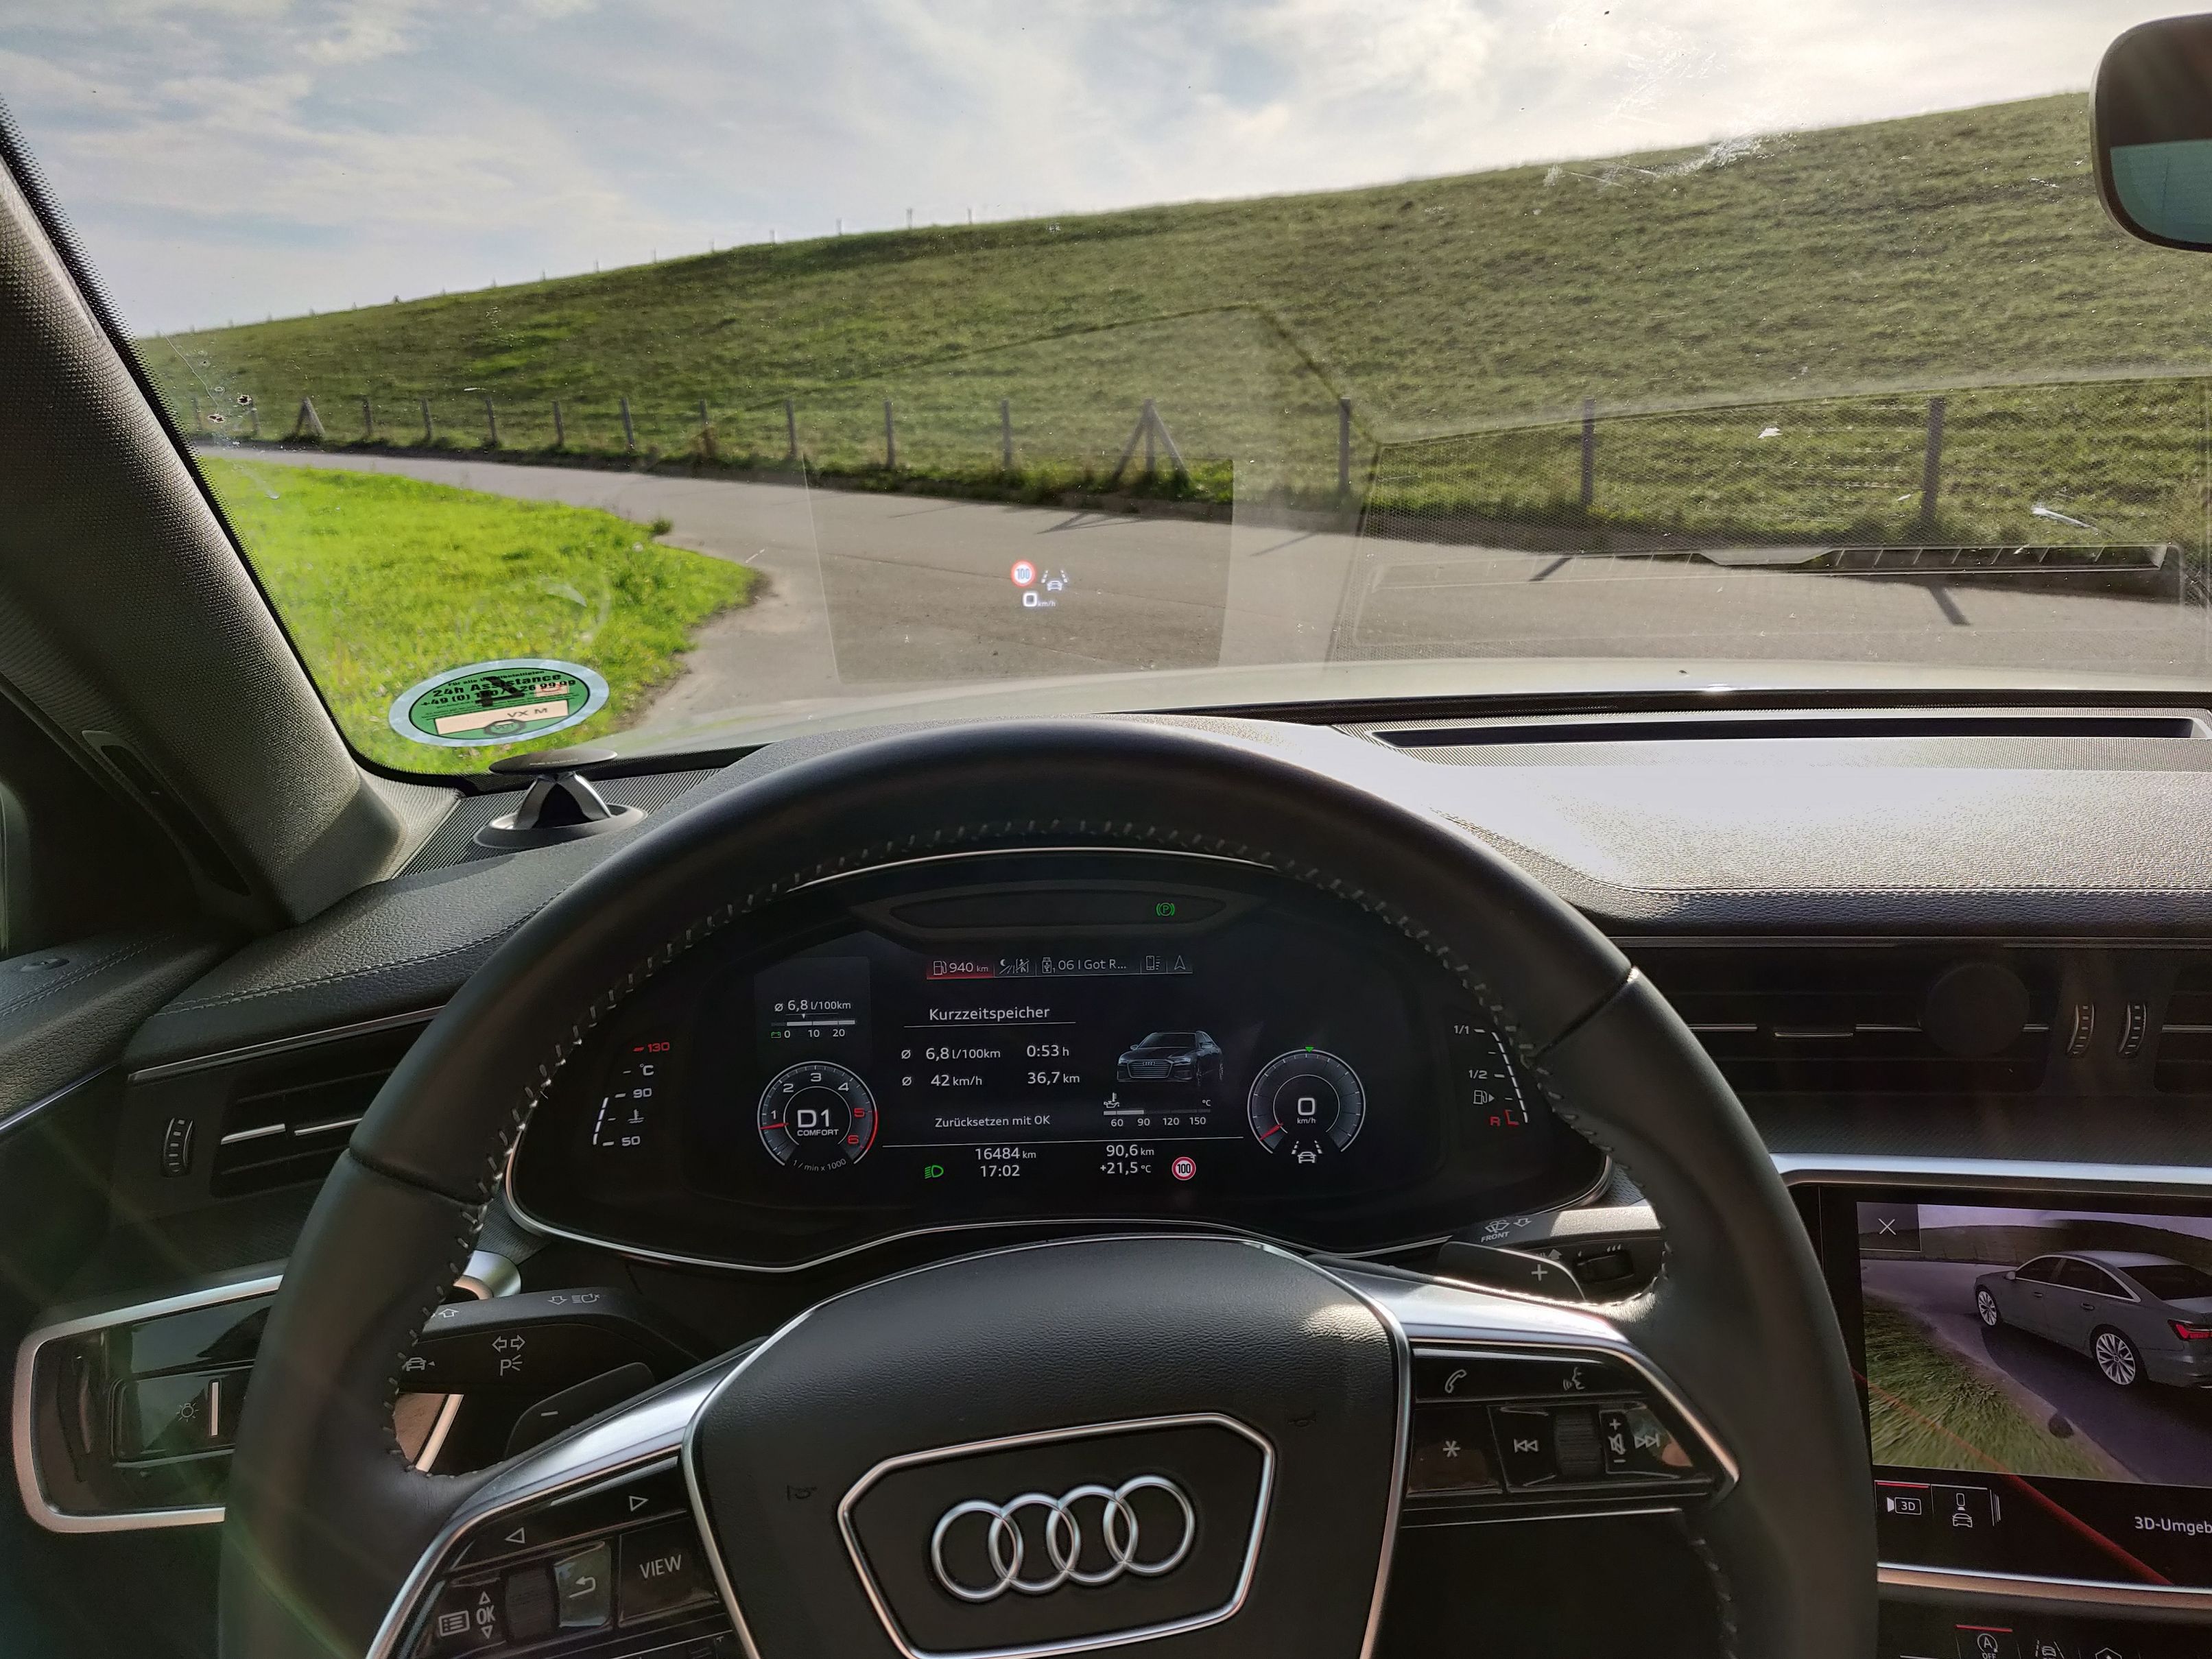 Audi A6 50TDI quattro: Infotainment hui - Motor pfui - Seite 3 -  Mietwagen-Talk.de